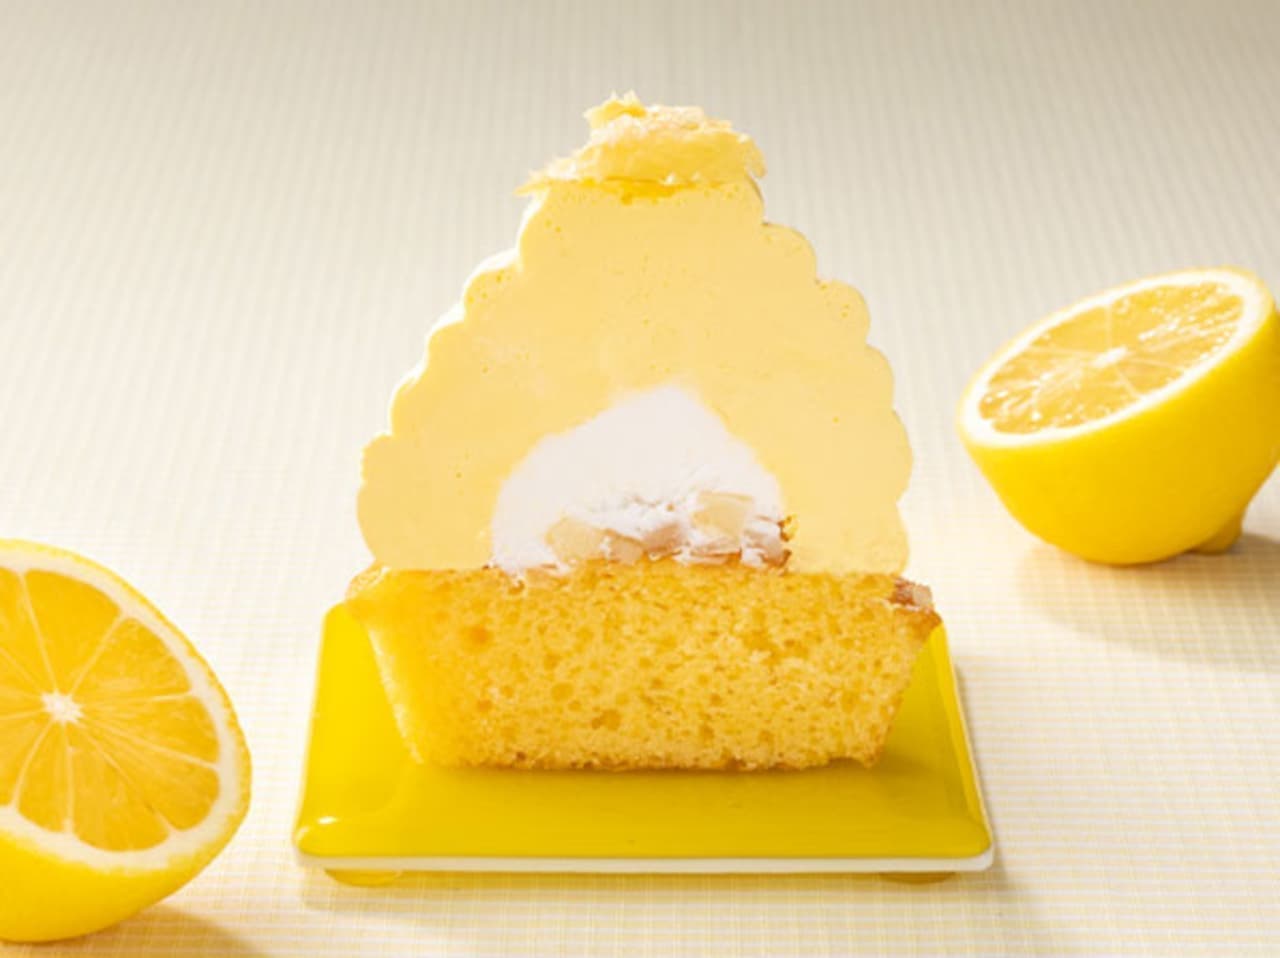 FLO "Lemon Mousse Cake" and "Peach & Mango